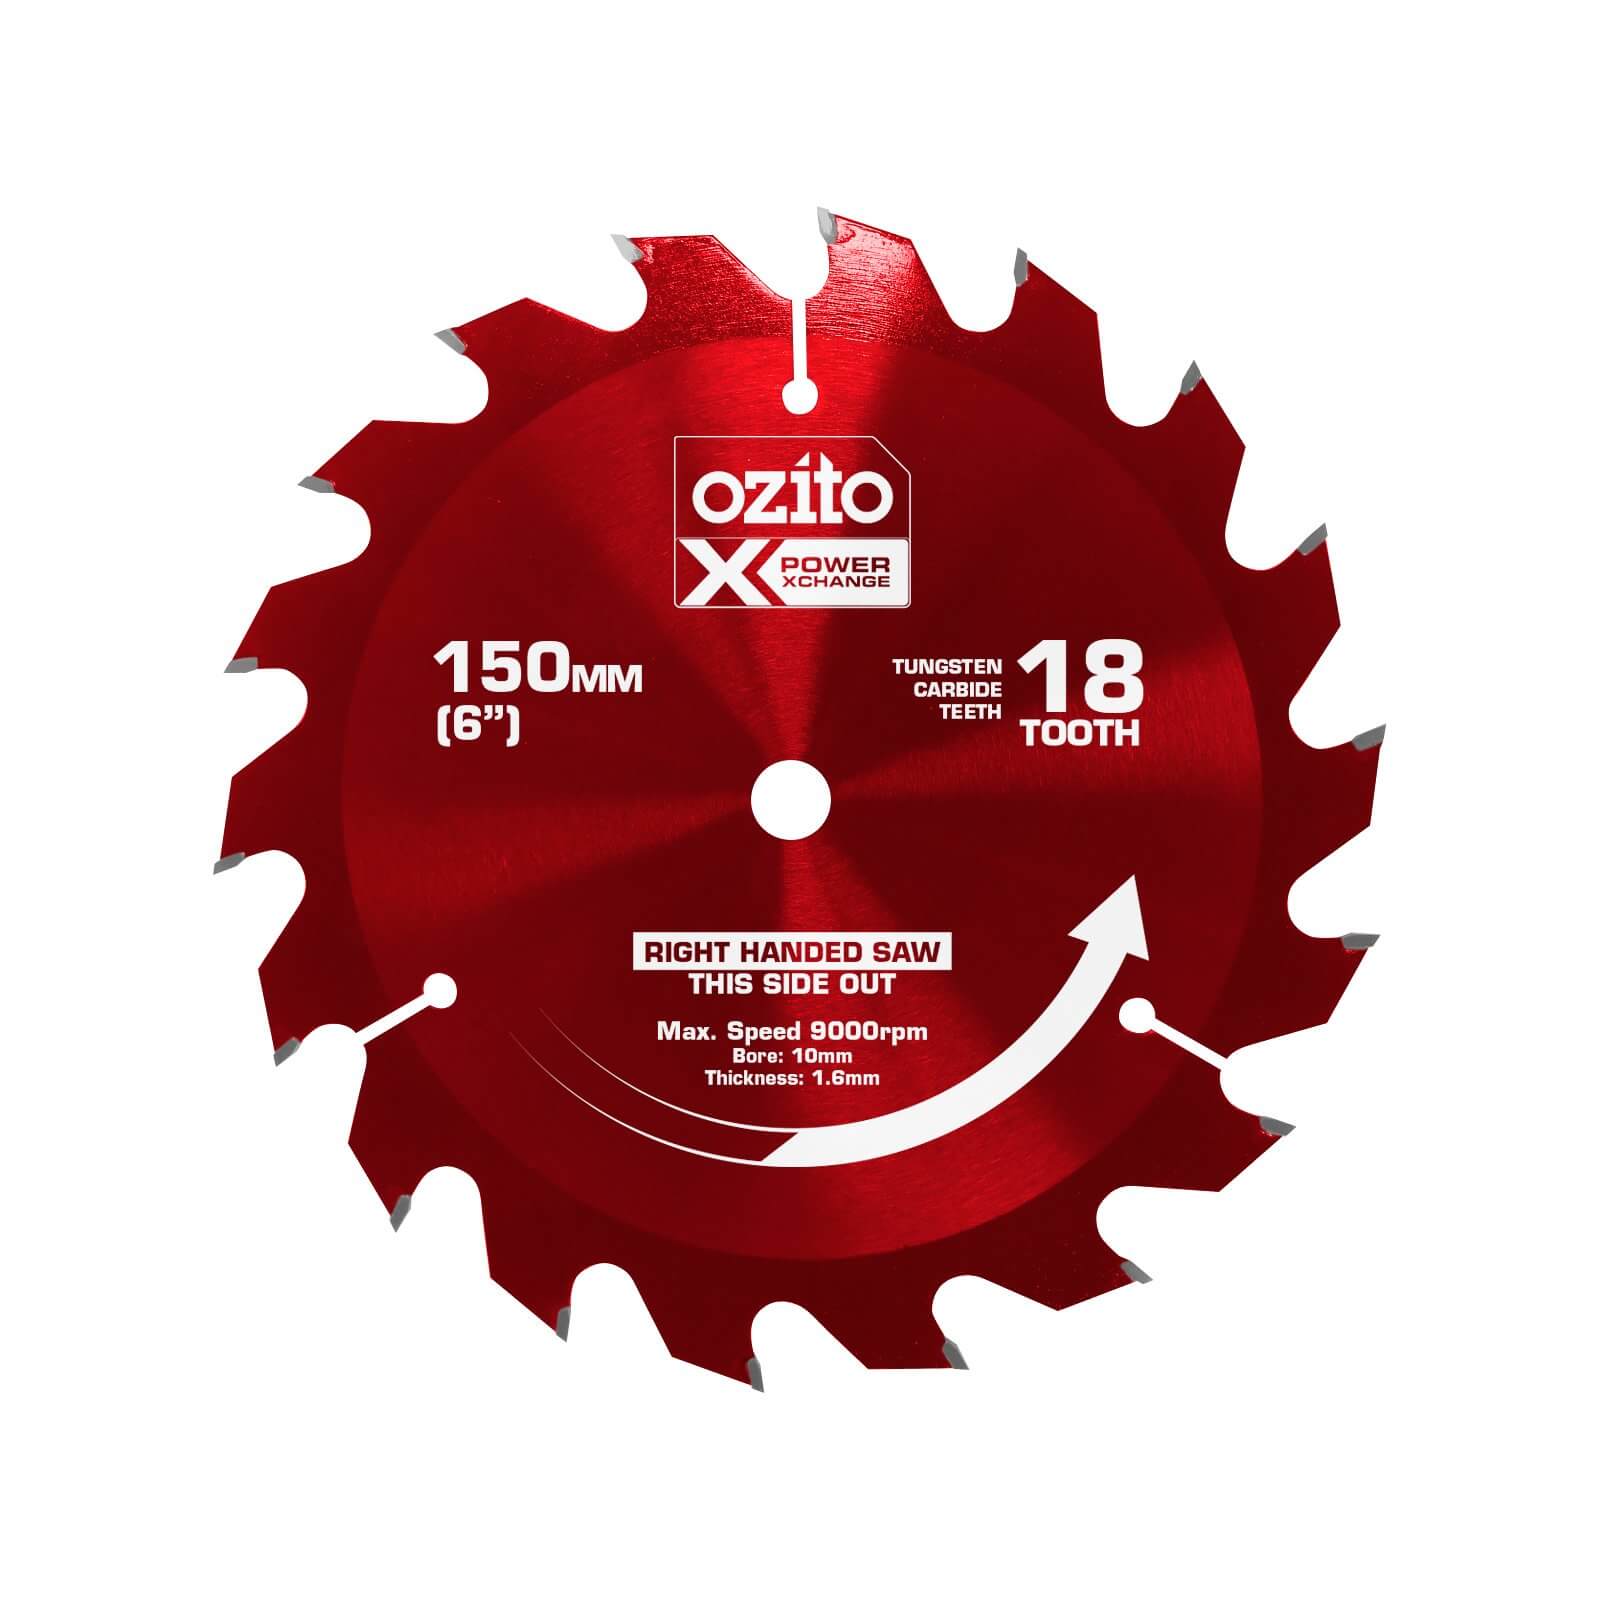 Ozito by Einhell Power X Change 150mm 18 Tooth Circular Saw Blade